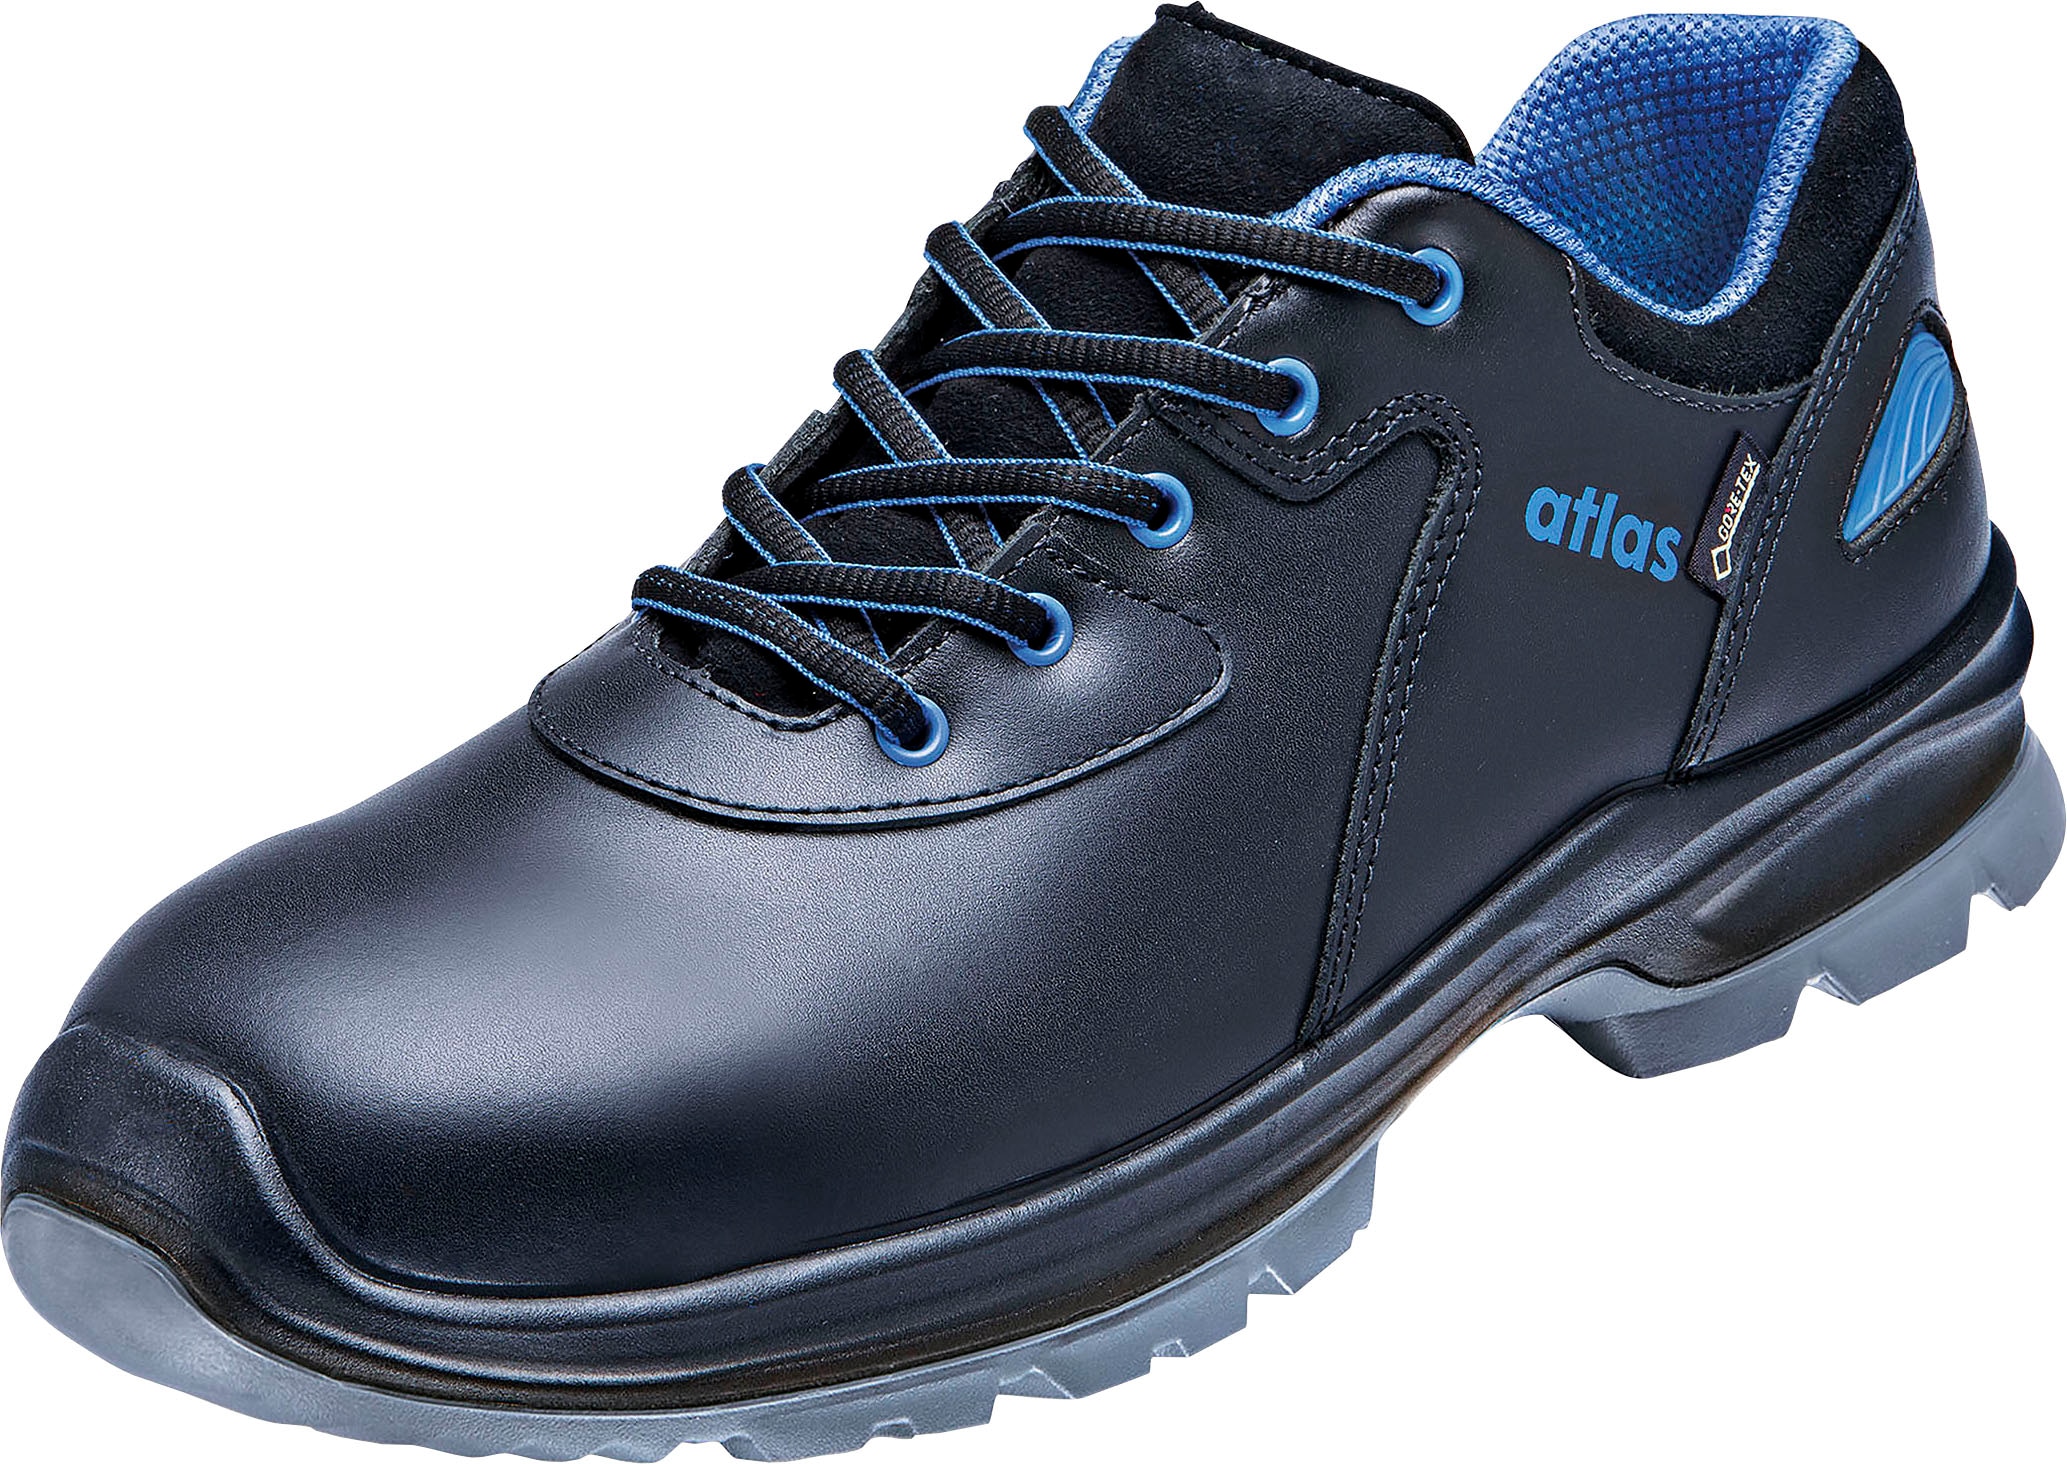 Schuhe 563 bei Sicherheitsschuh OTTO Atlas S3 XP«, »GTX 2.0